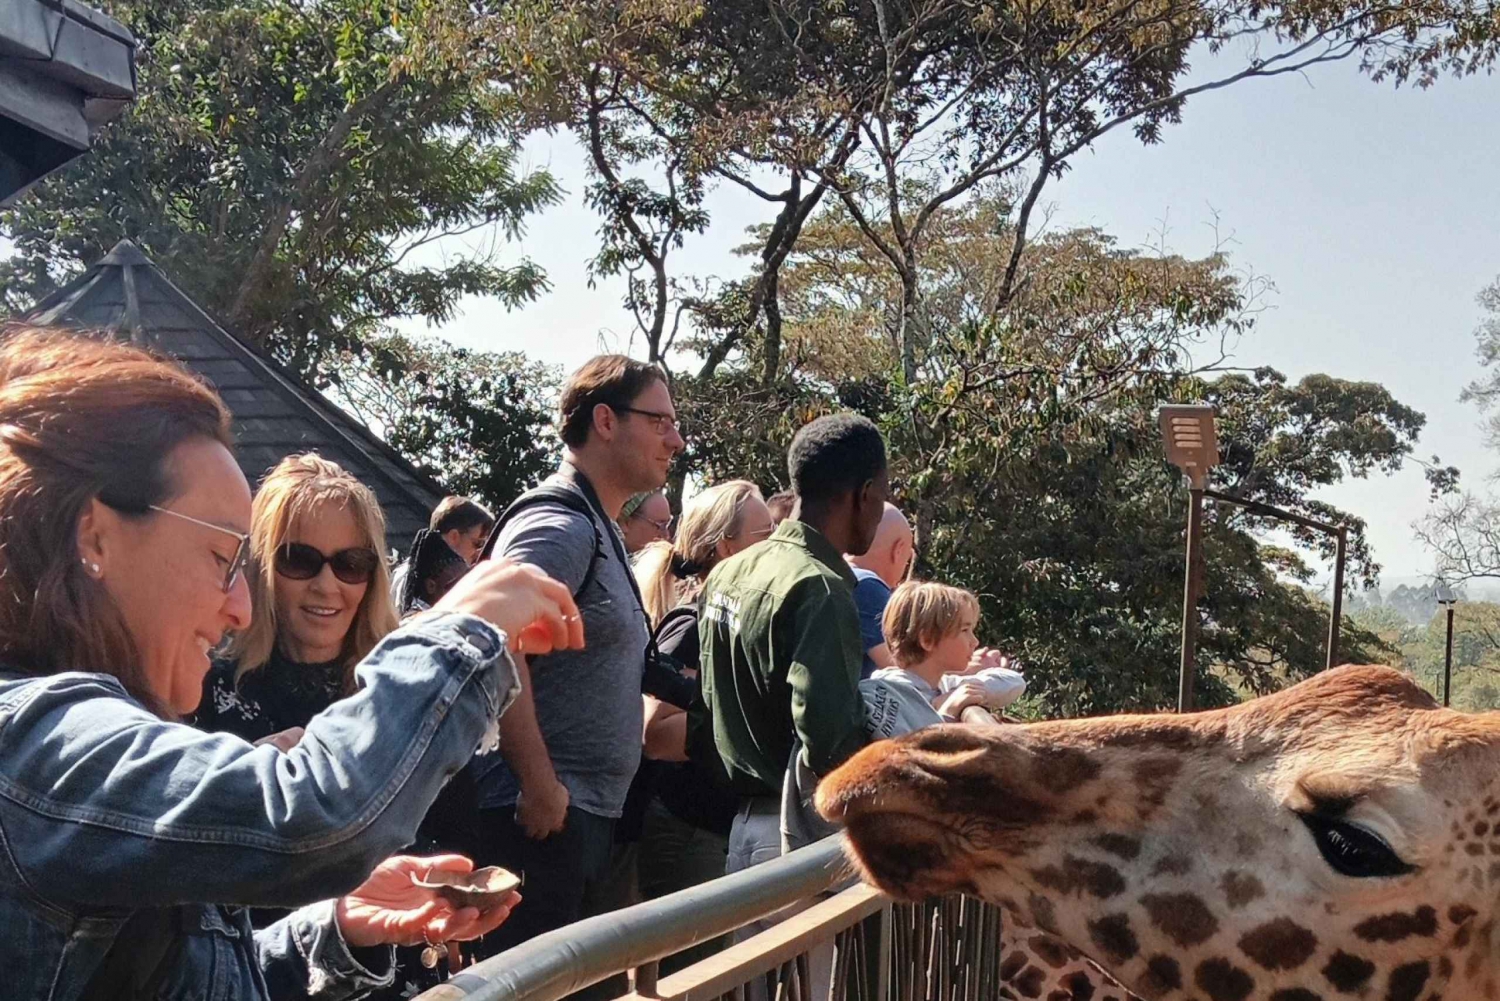 Nairobi: Baby elephants, giraffes, & beads Factory Half-Day